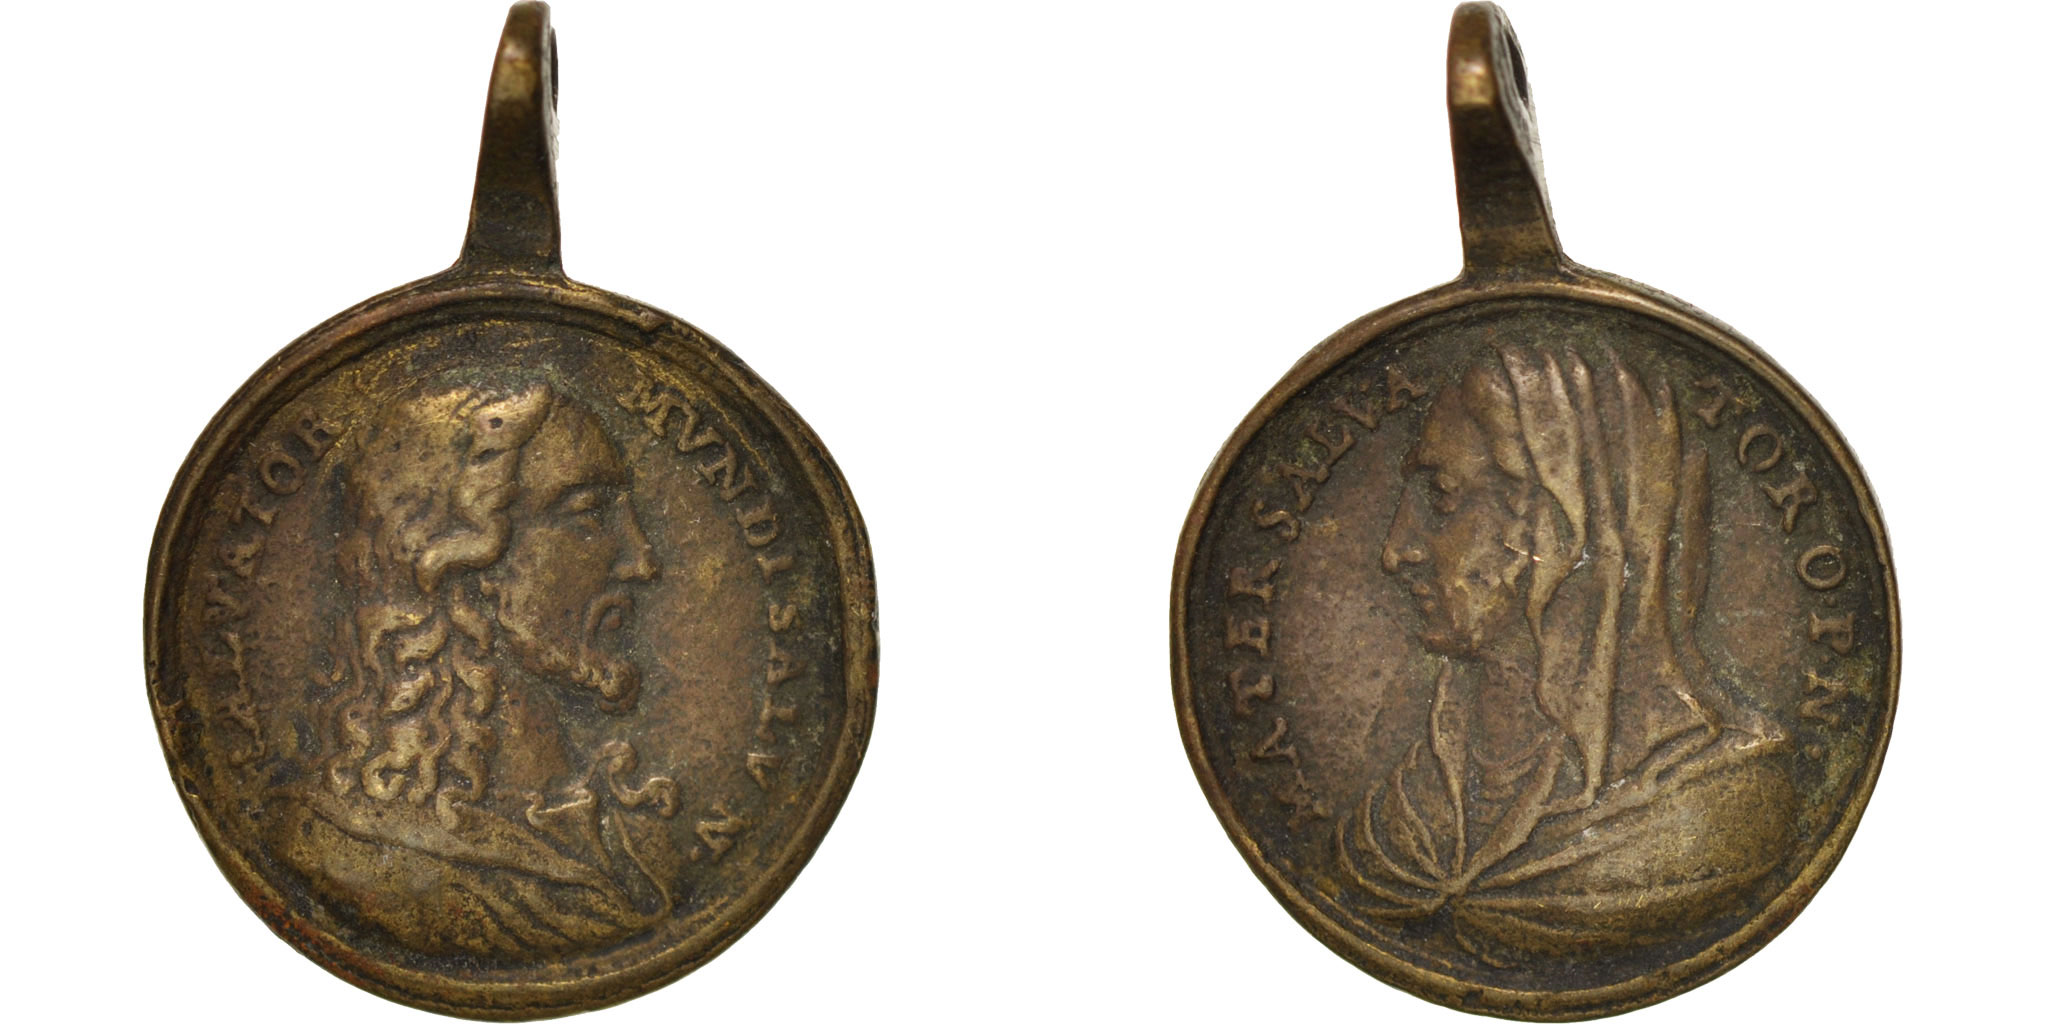 France, Medal, Religious medal, Religions & beliefs, 18TH CENTURY,